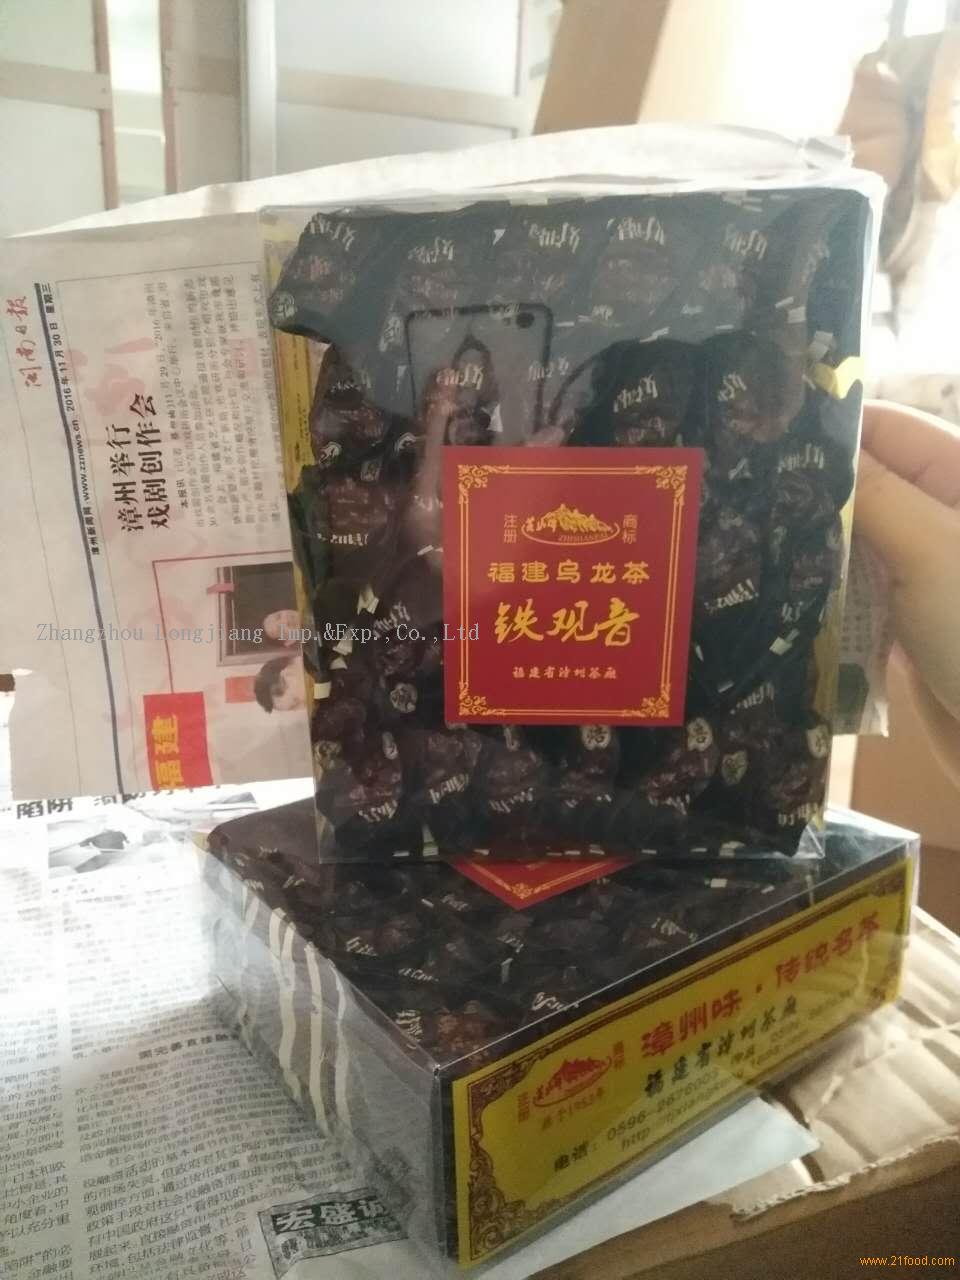 Iron Goddess Tea (Packet)